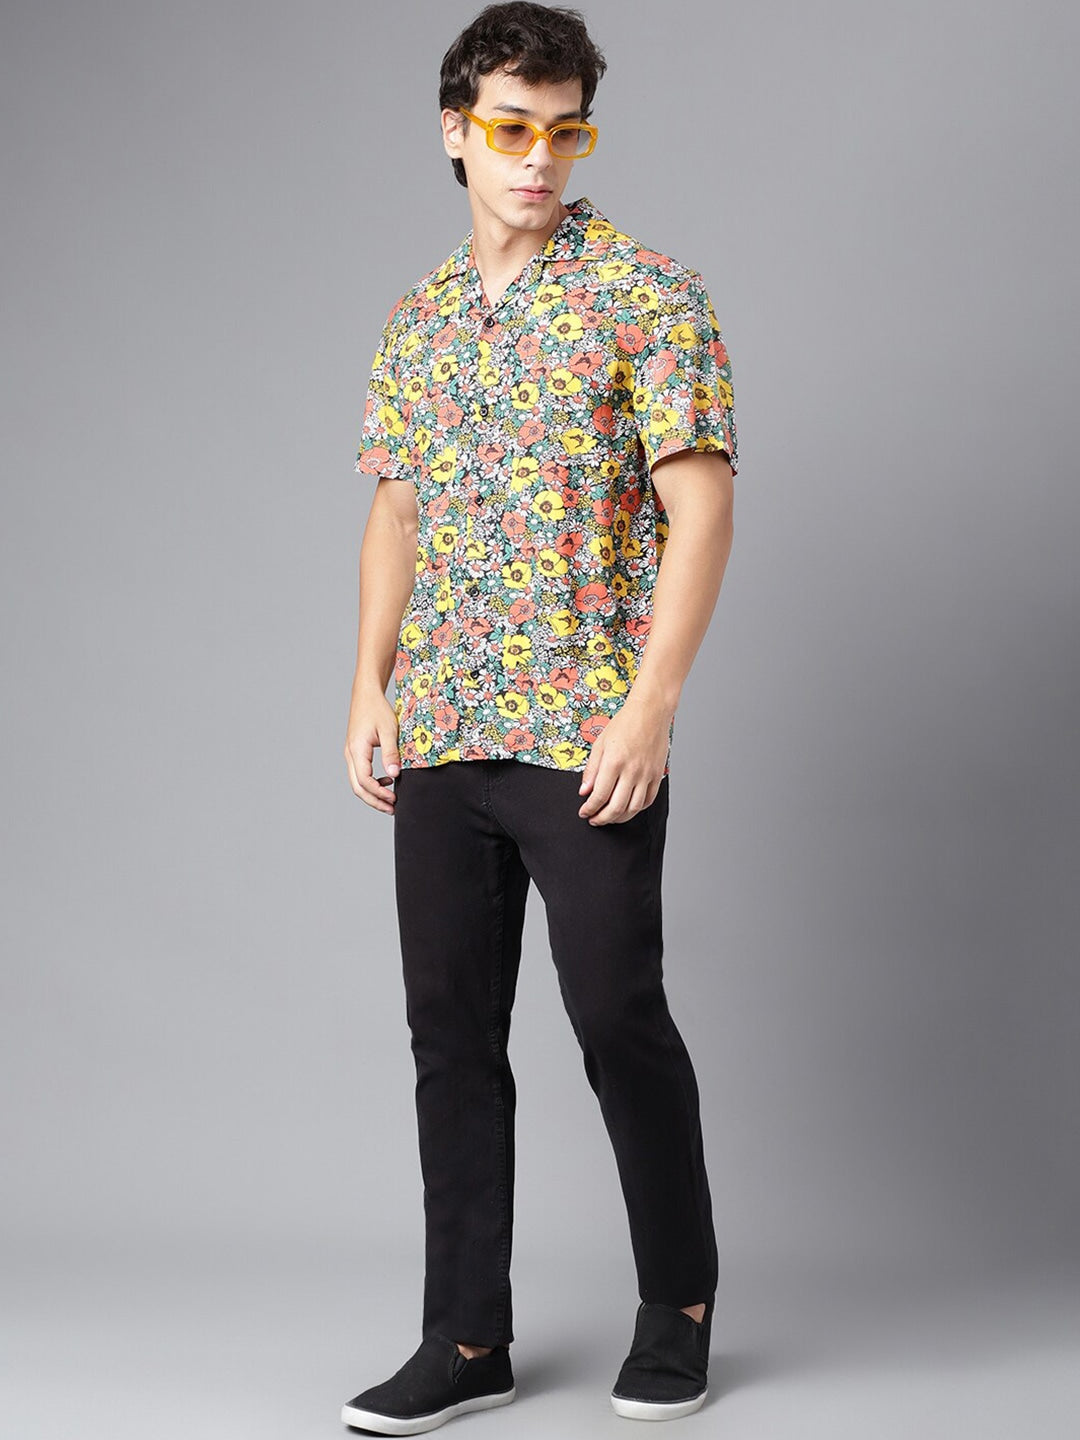 Men Yellow & Coral Floral Print Viscose Rayon Regular Fit Casual Resort Shirt